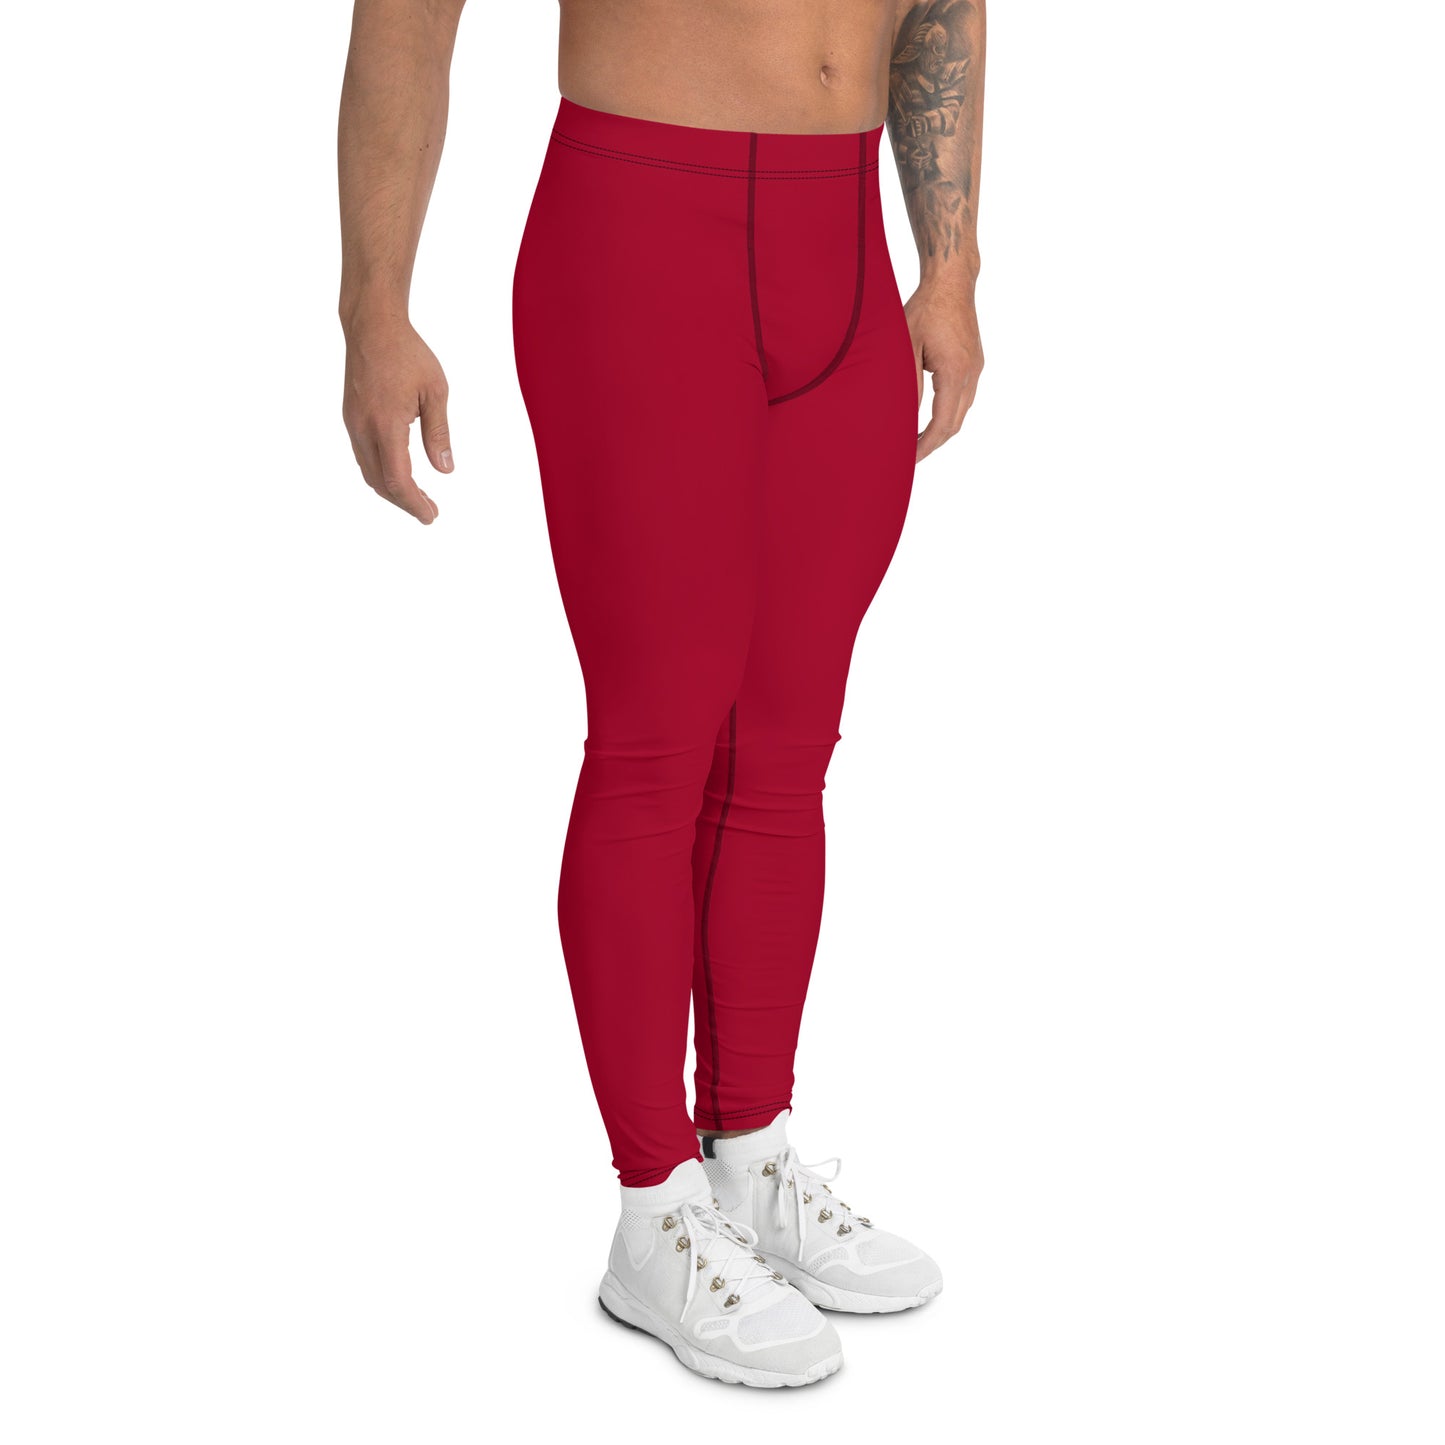 Humble Sportswear, men's color match active wear leggings red 